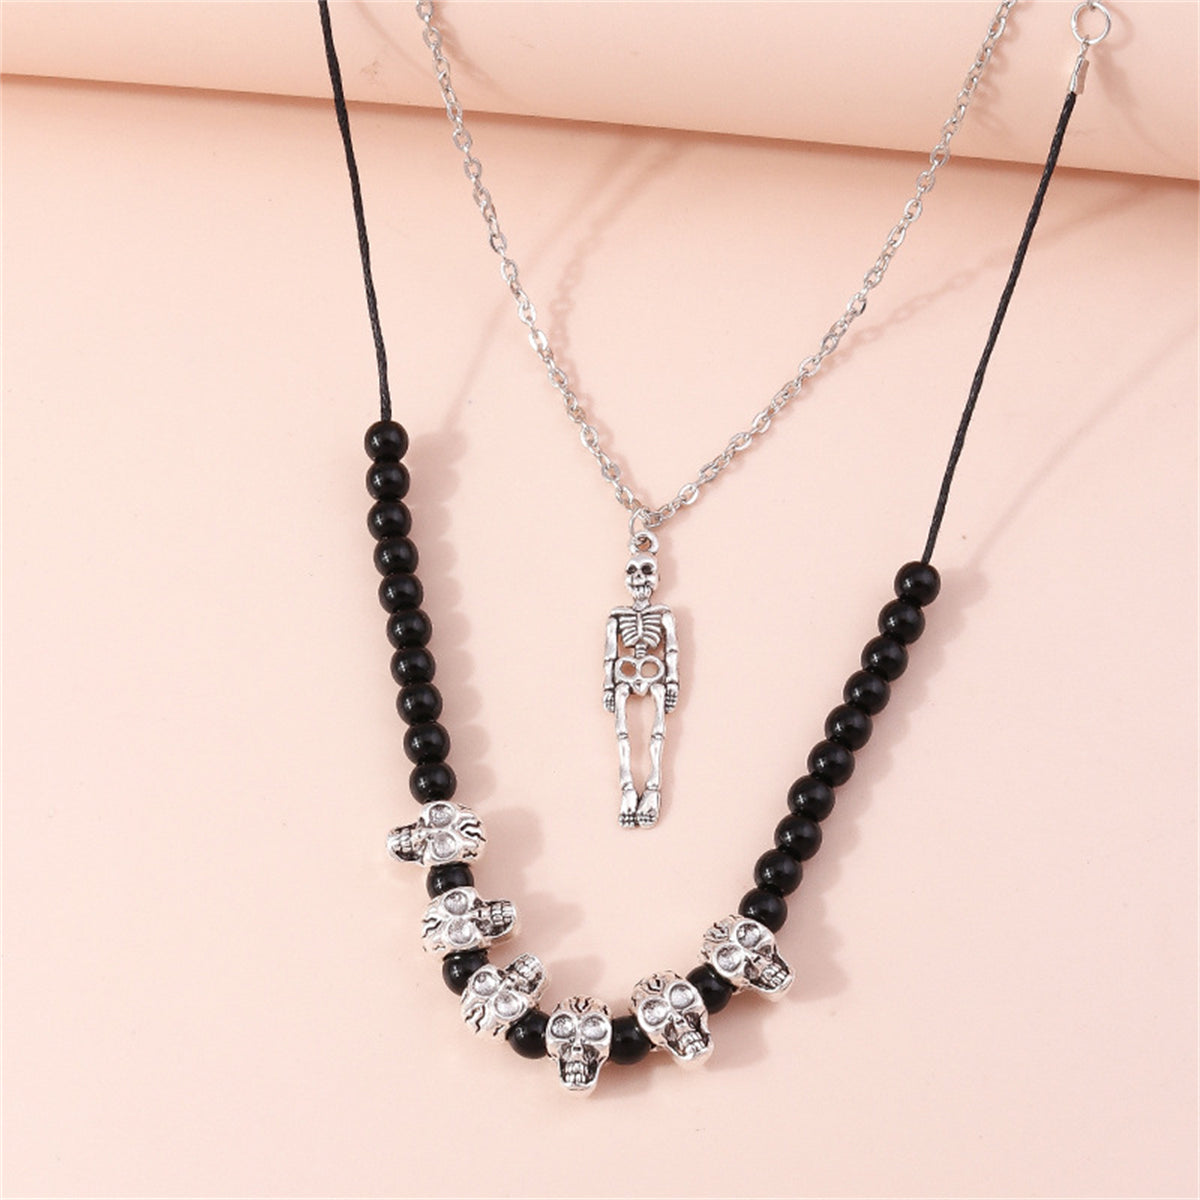 Black Quartz & Silver-Plated Skeleton Layered Pendant Necklace